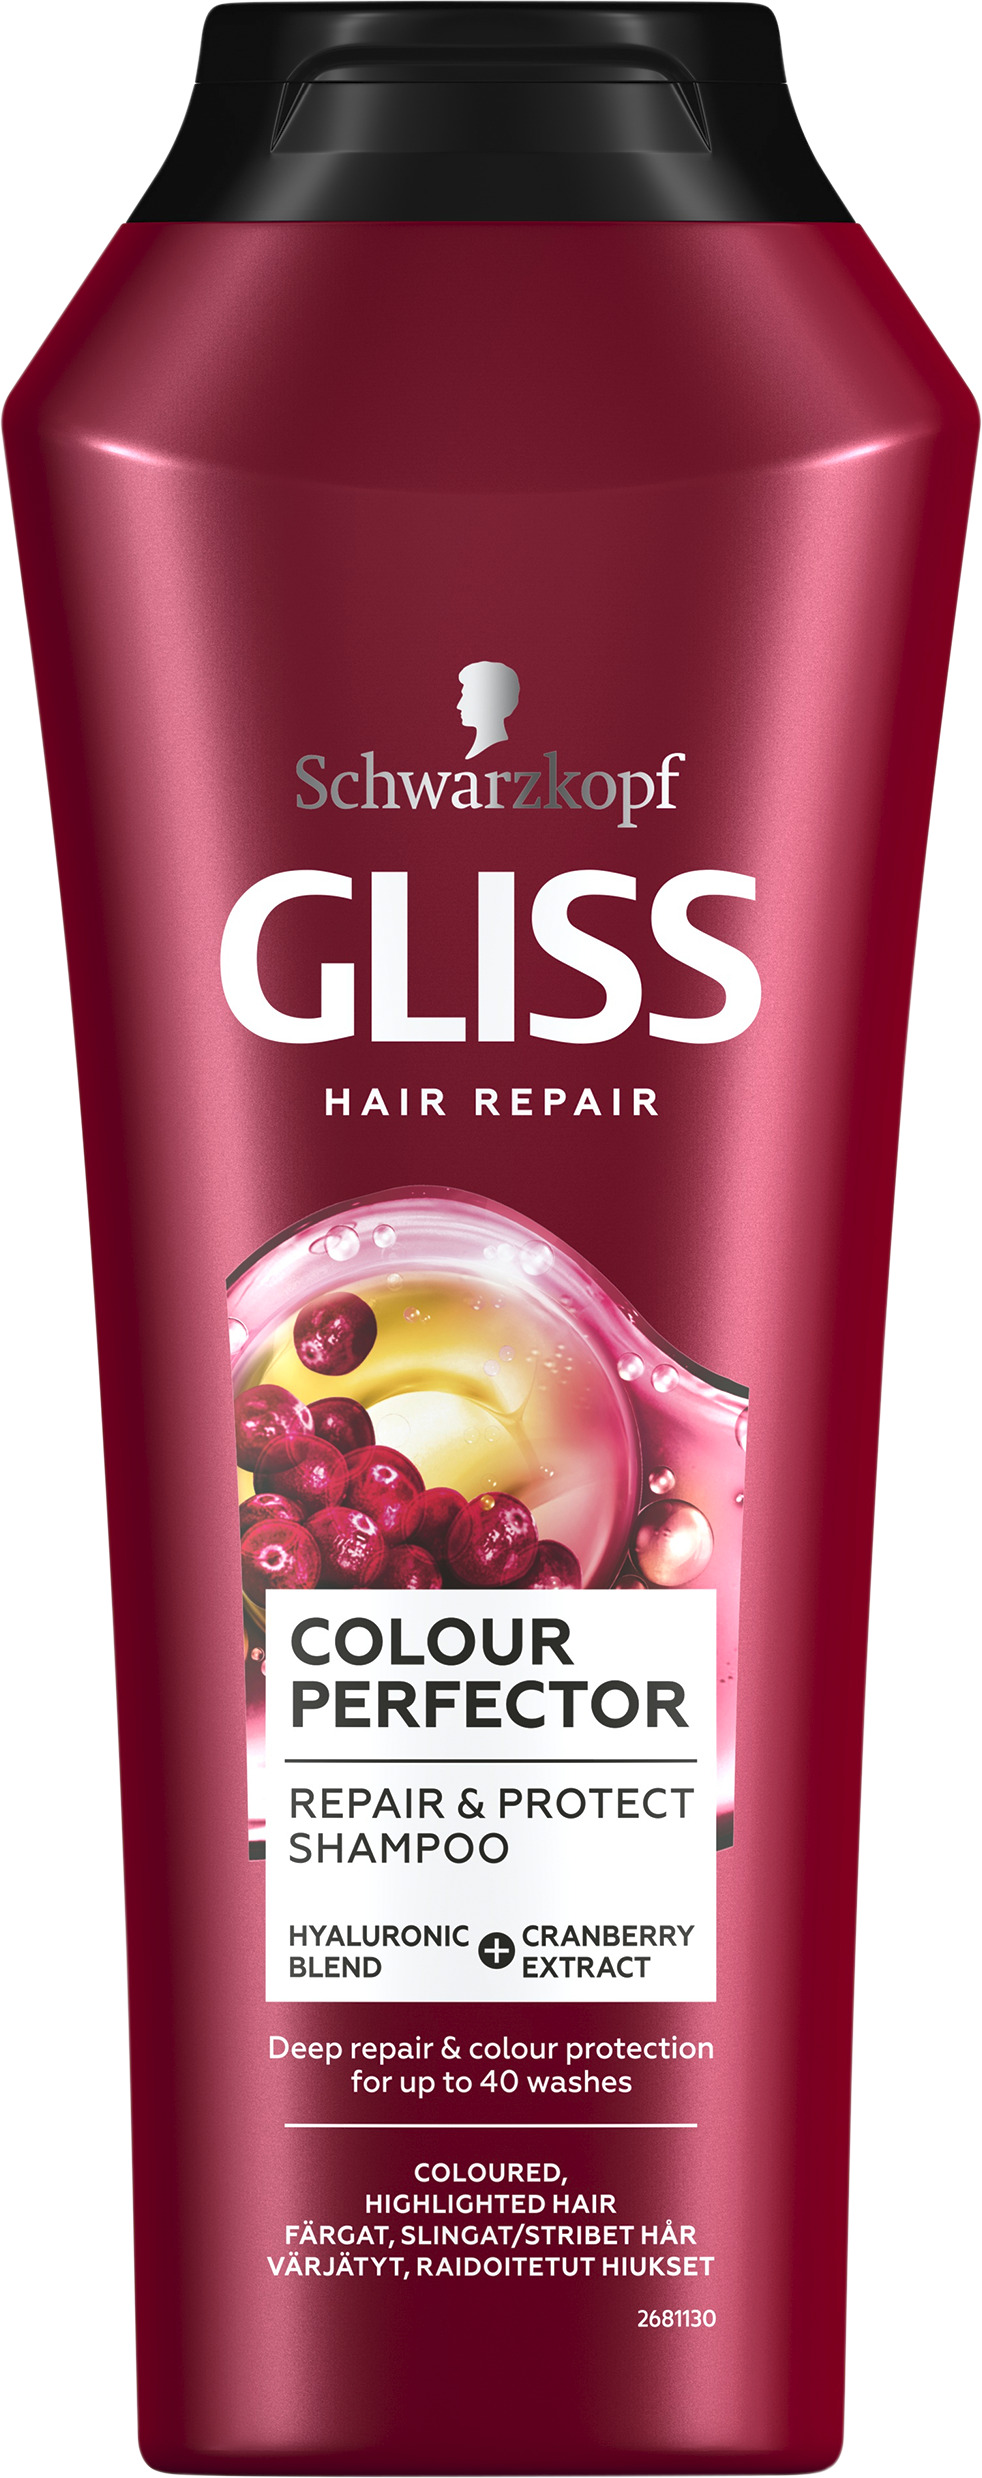 Schwarzkopf Gliss Hair Repair Colur Perfector Schampo 250 ml